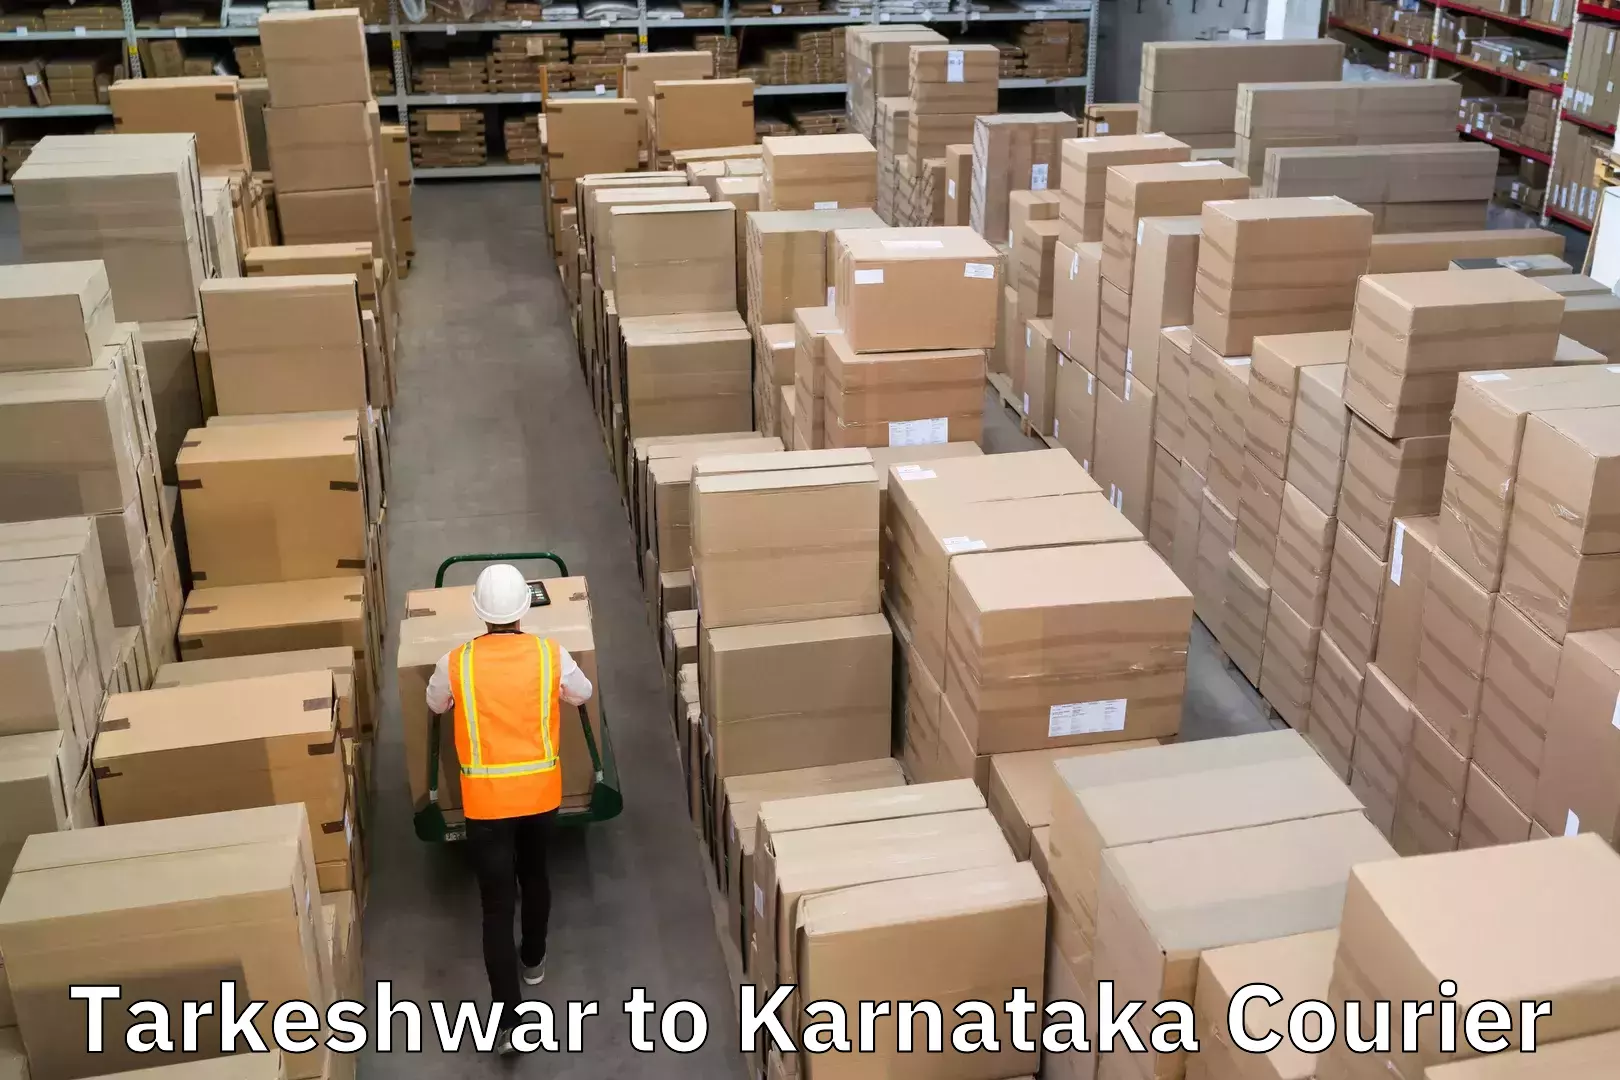 Package delivery network Tarkeshwar to Karnataka